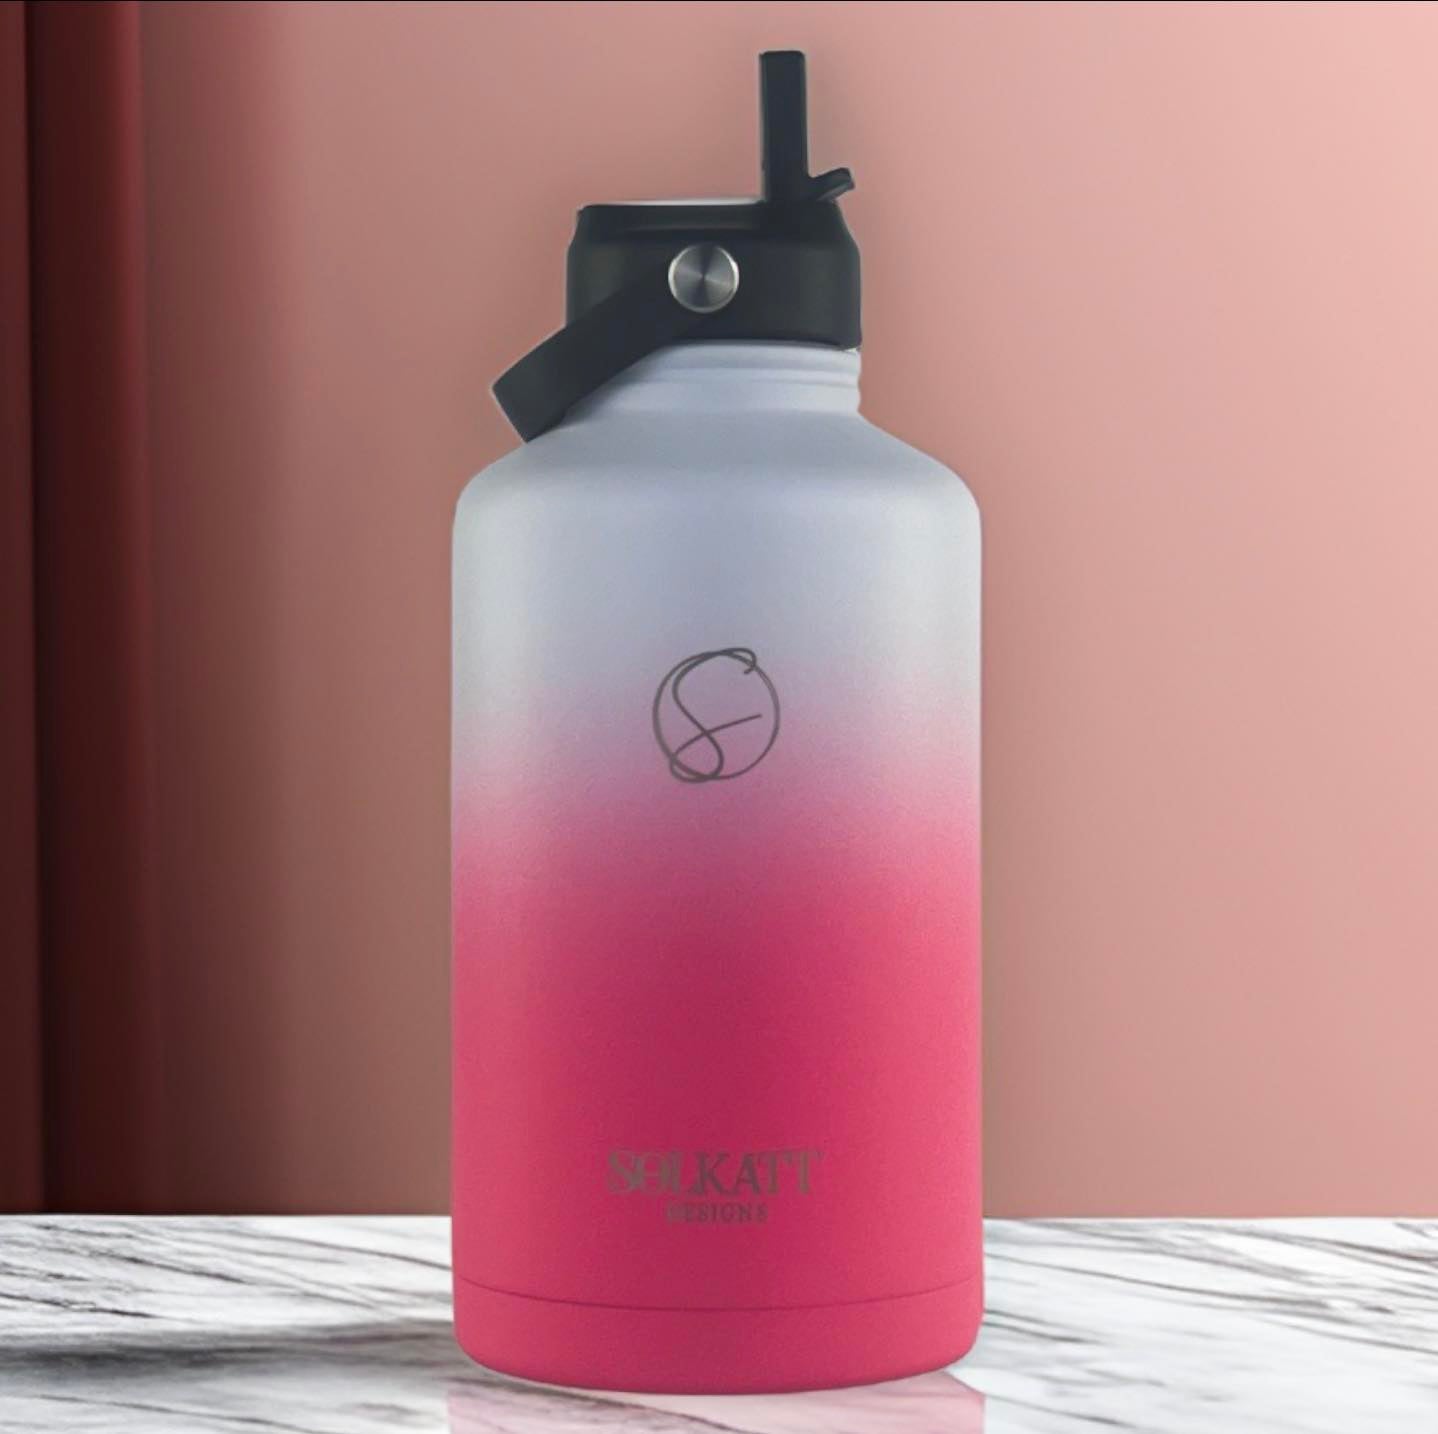 Hot Pink 1.9L / 64oz Stainless Steel Insulated Drink Bottle - Solkatt Designs 